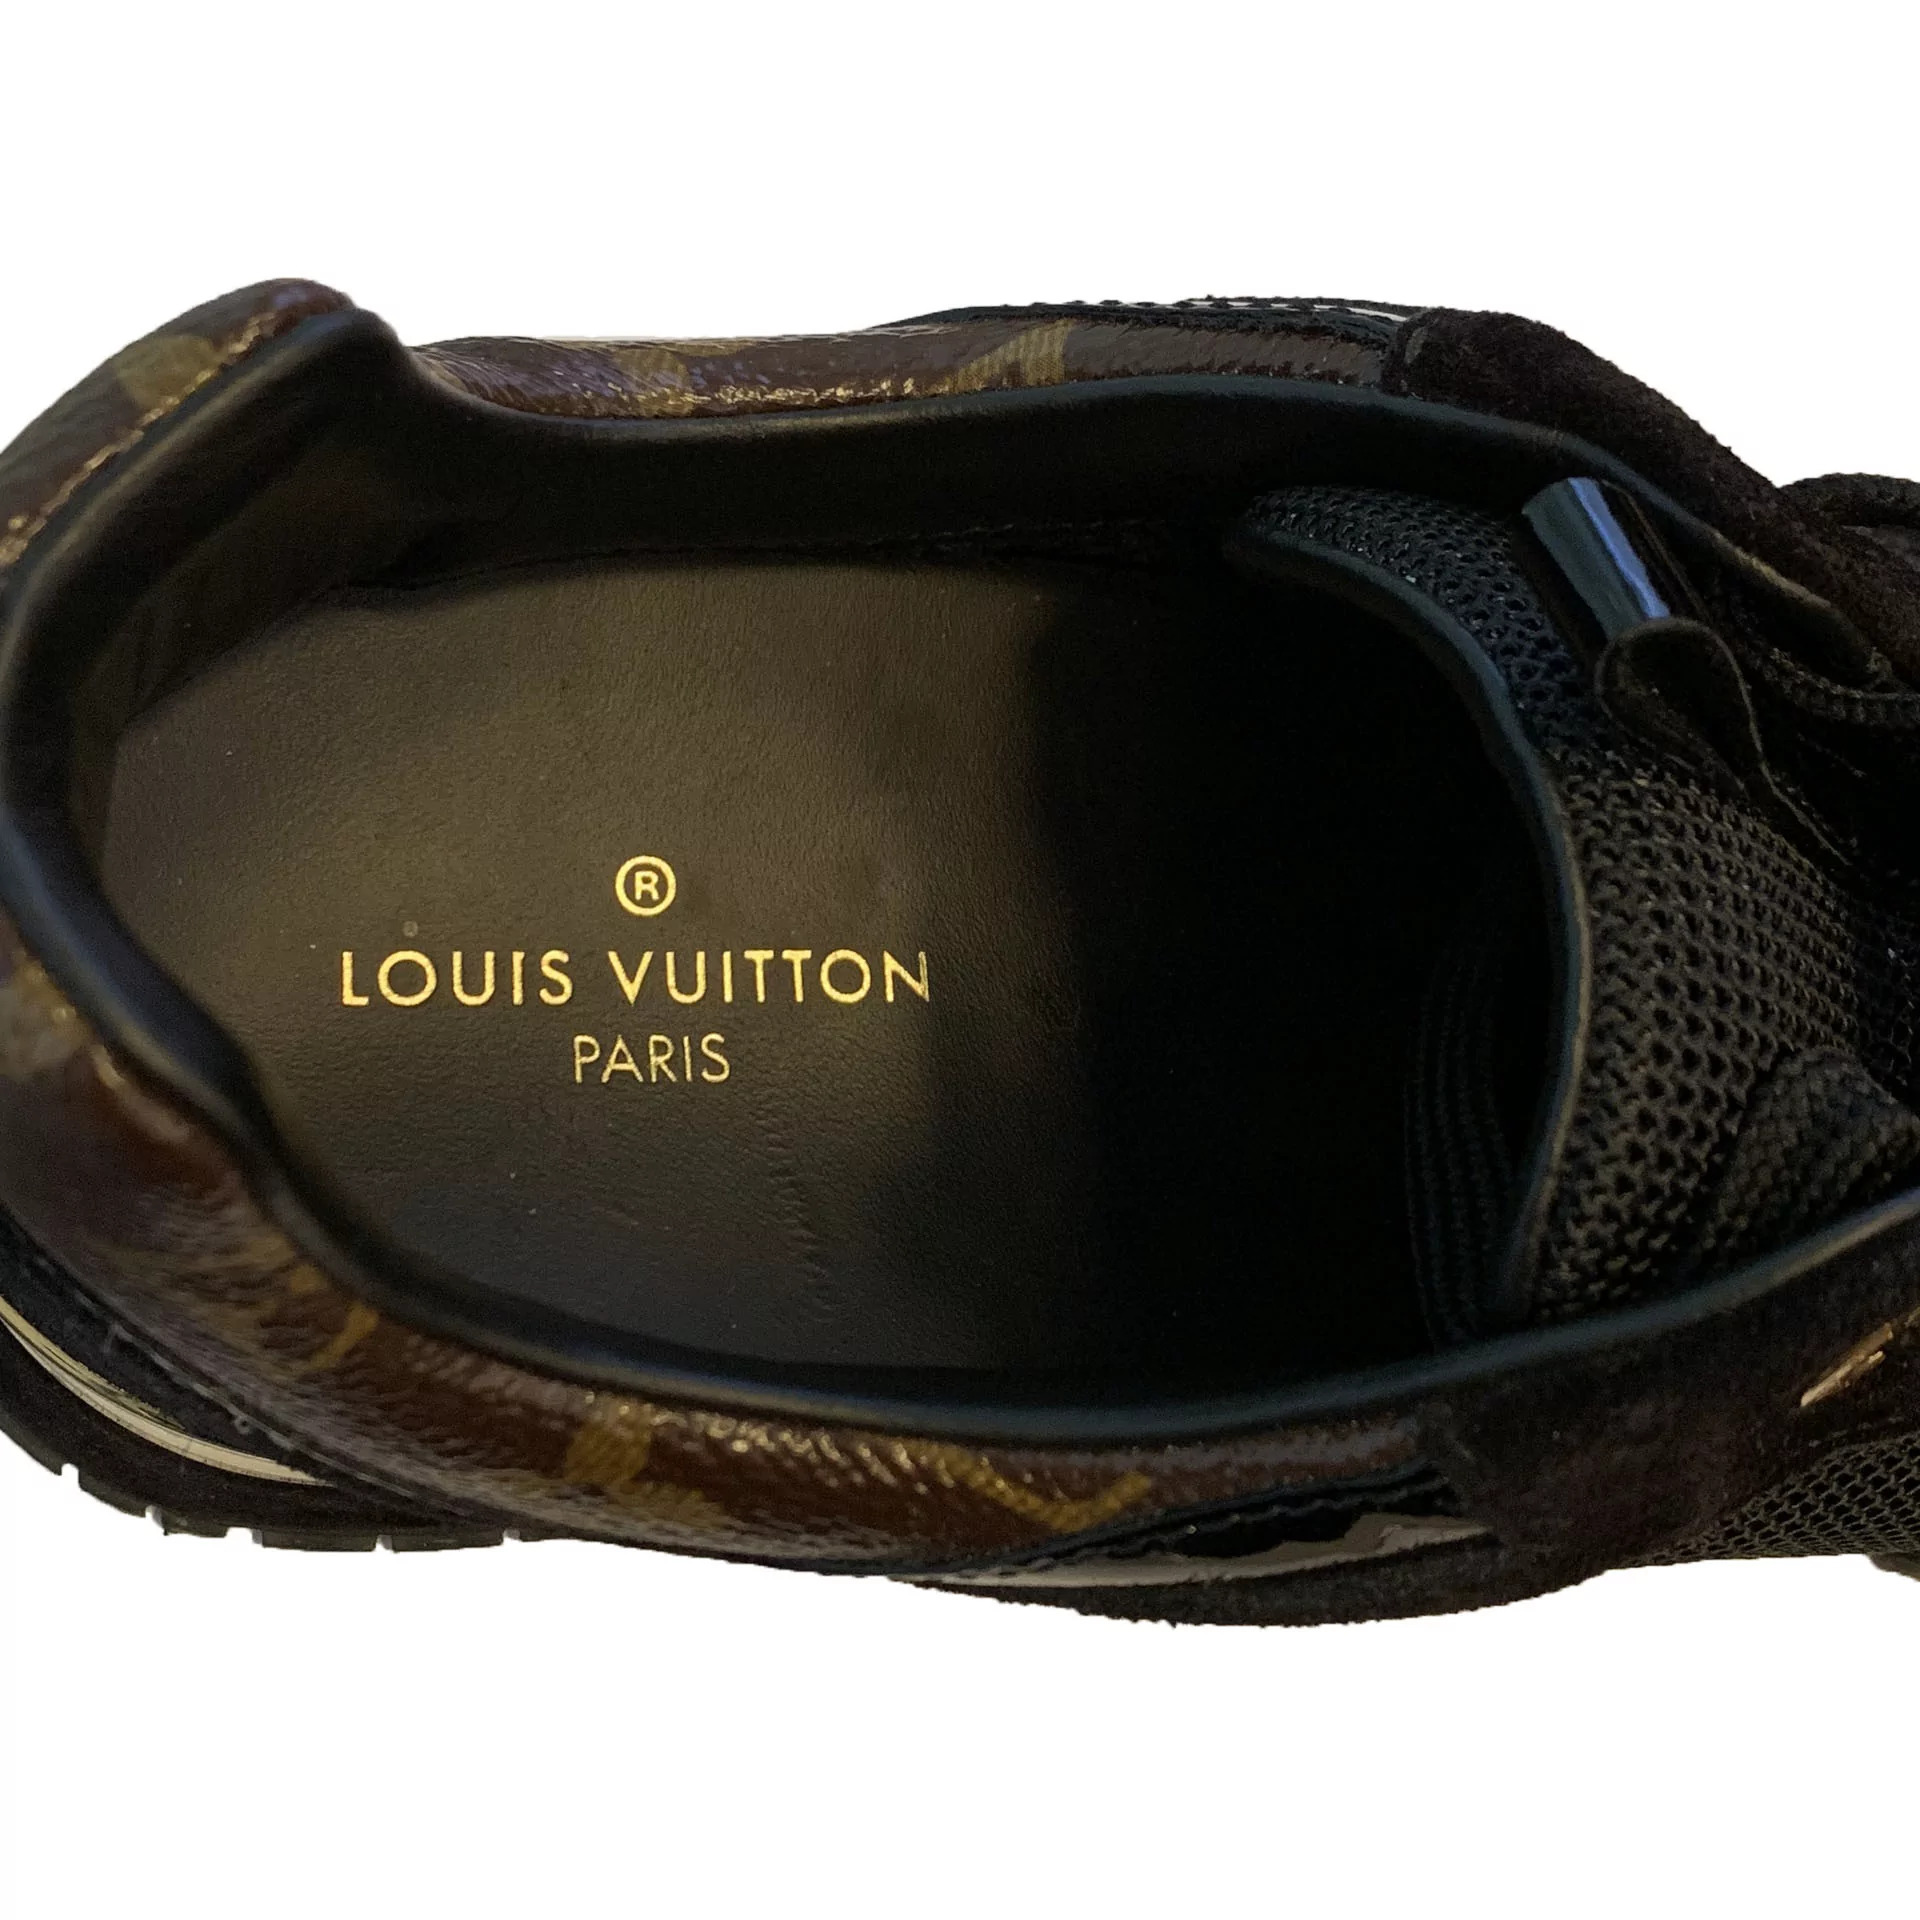 Sneaker Louis Vuitton Run Away 